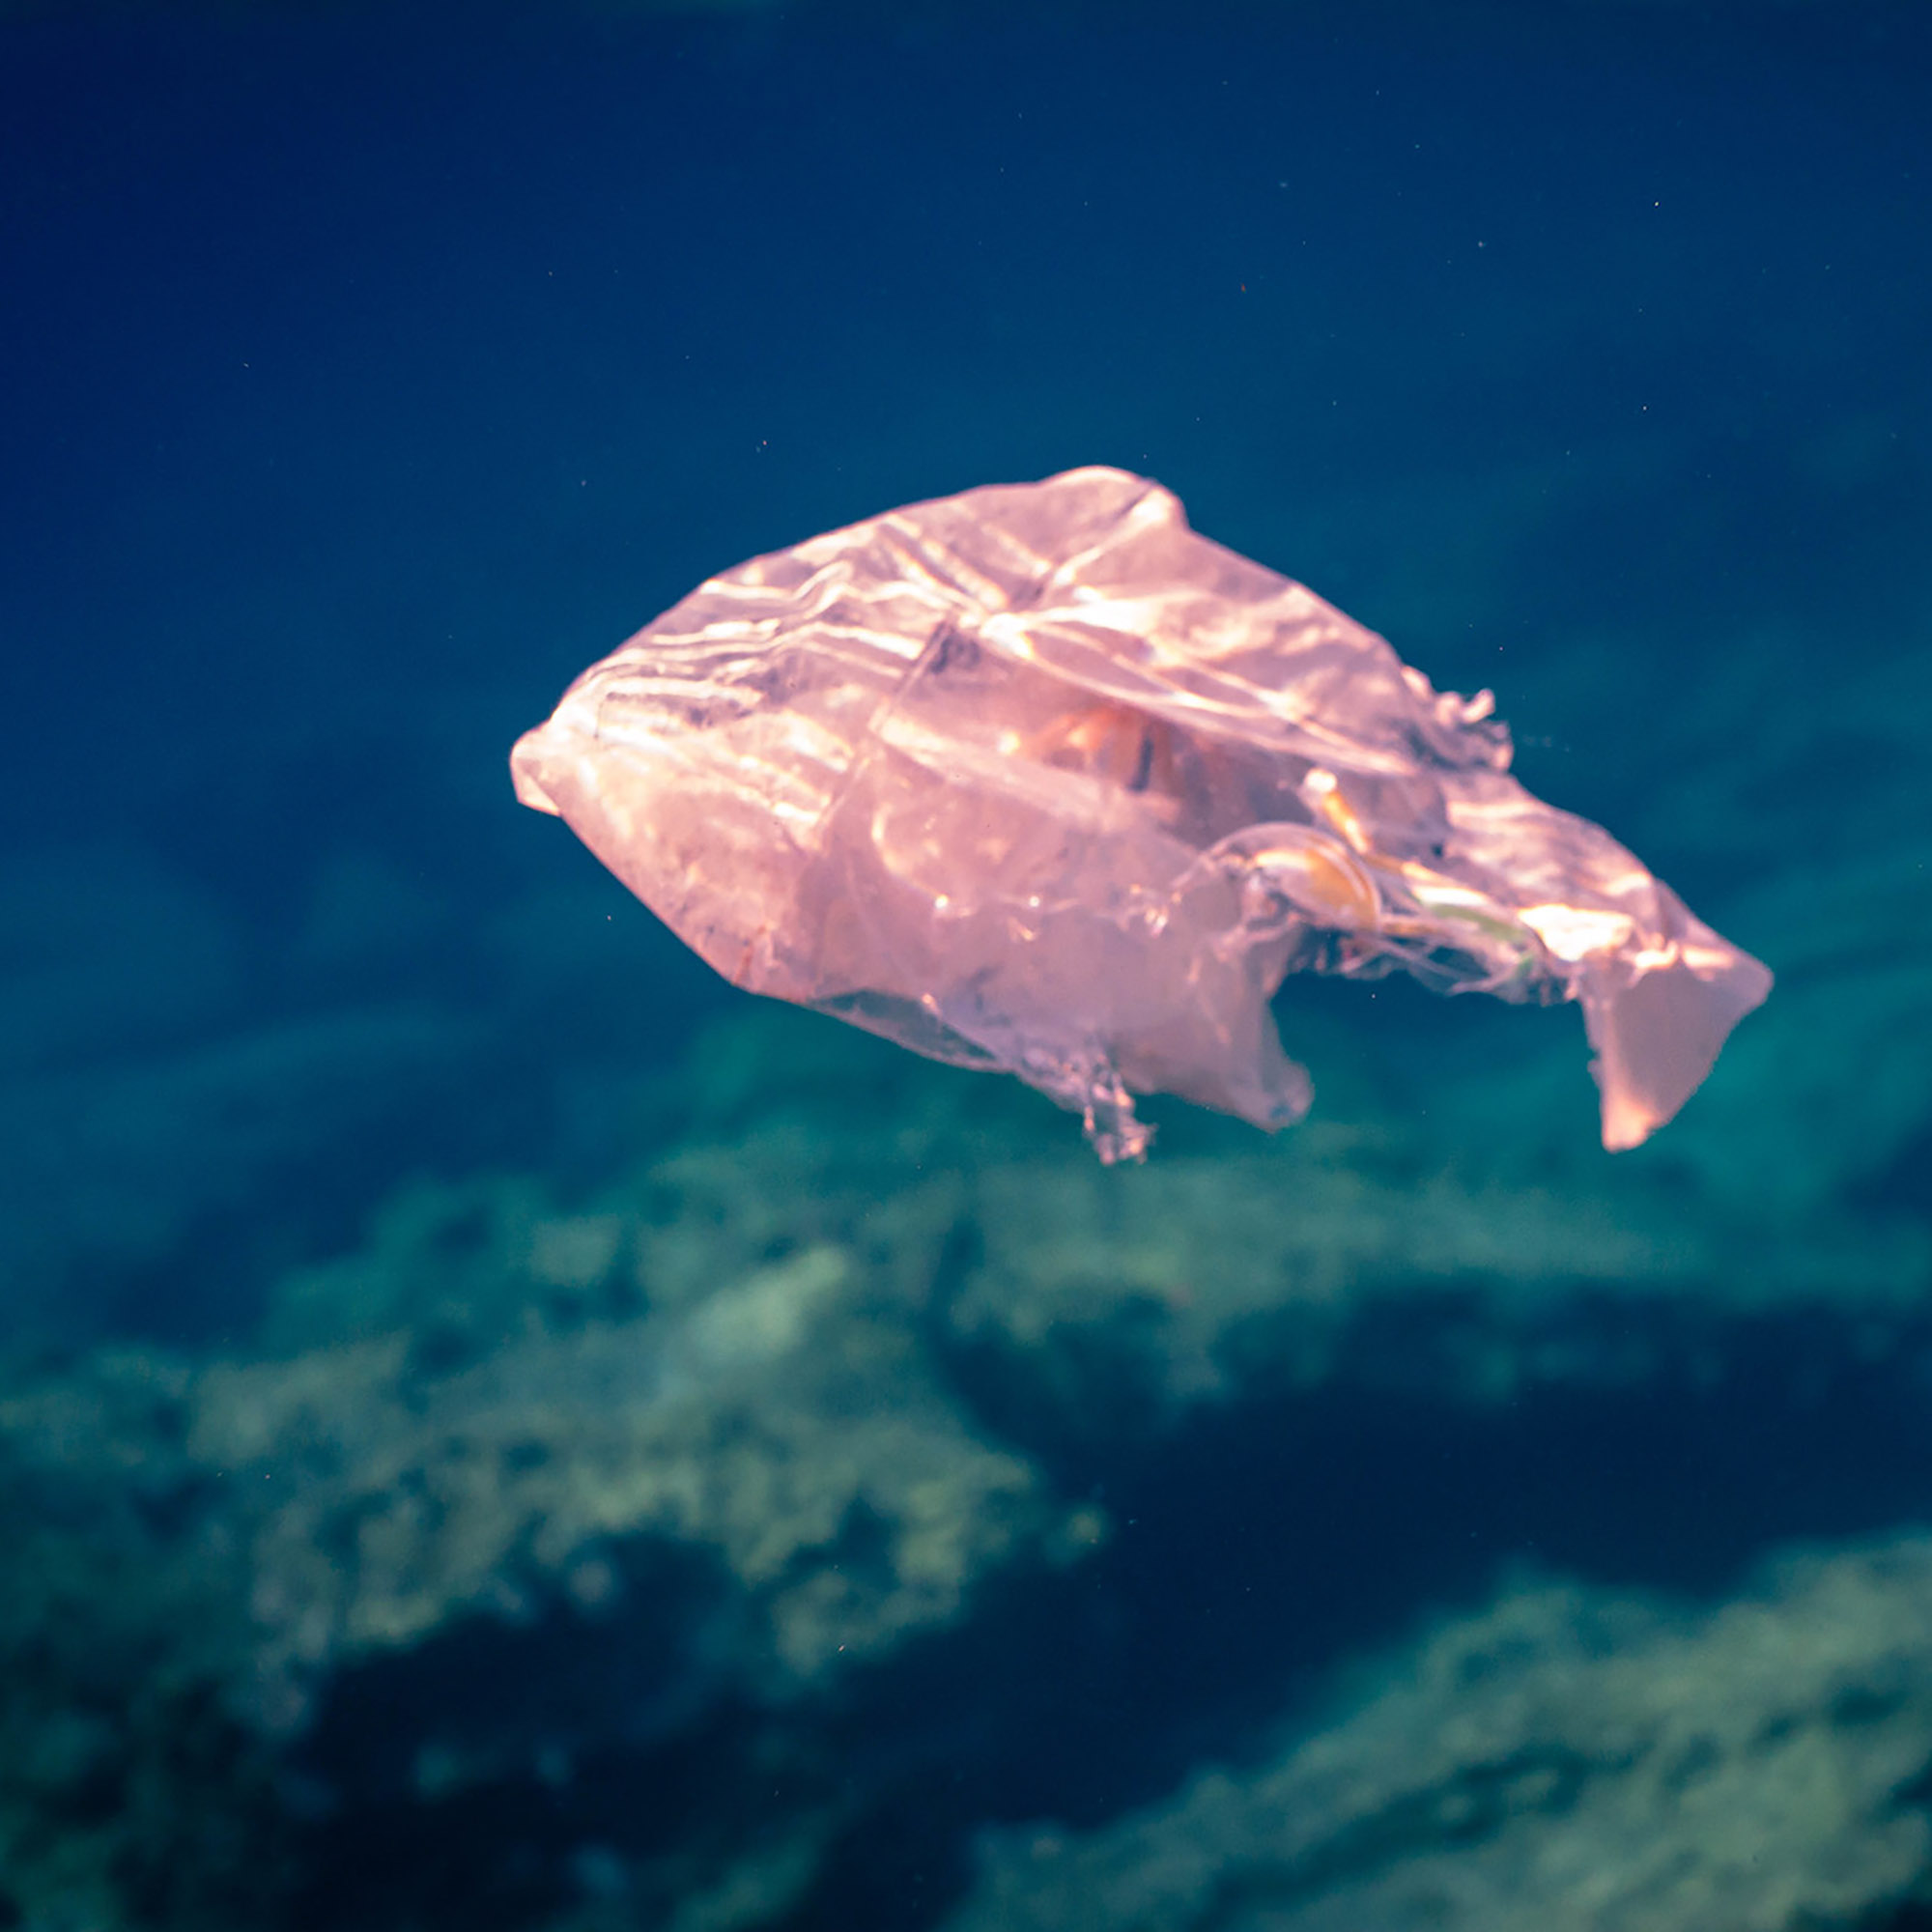 Photo of aged plastic bag drifting underwater.